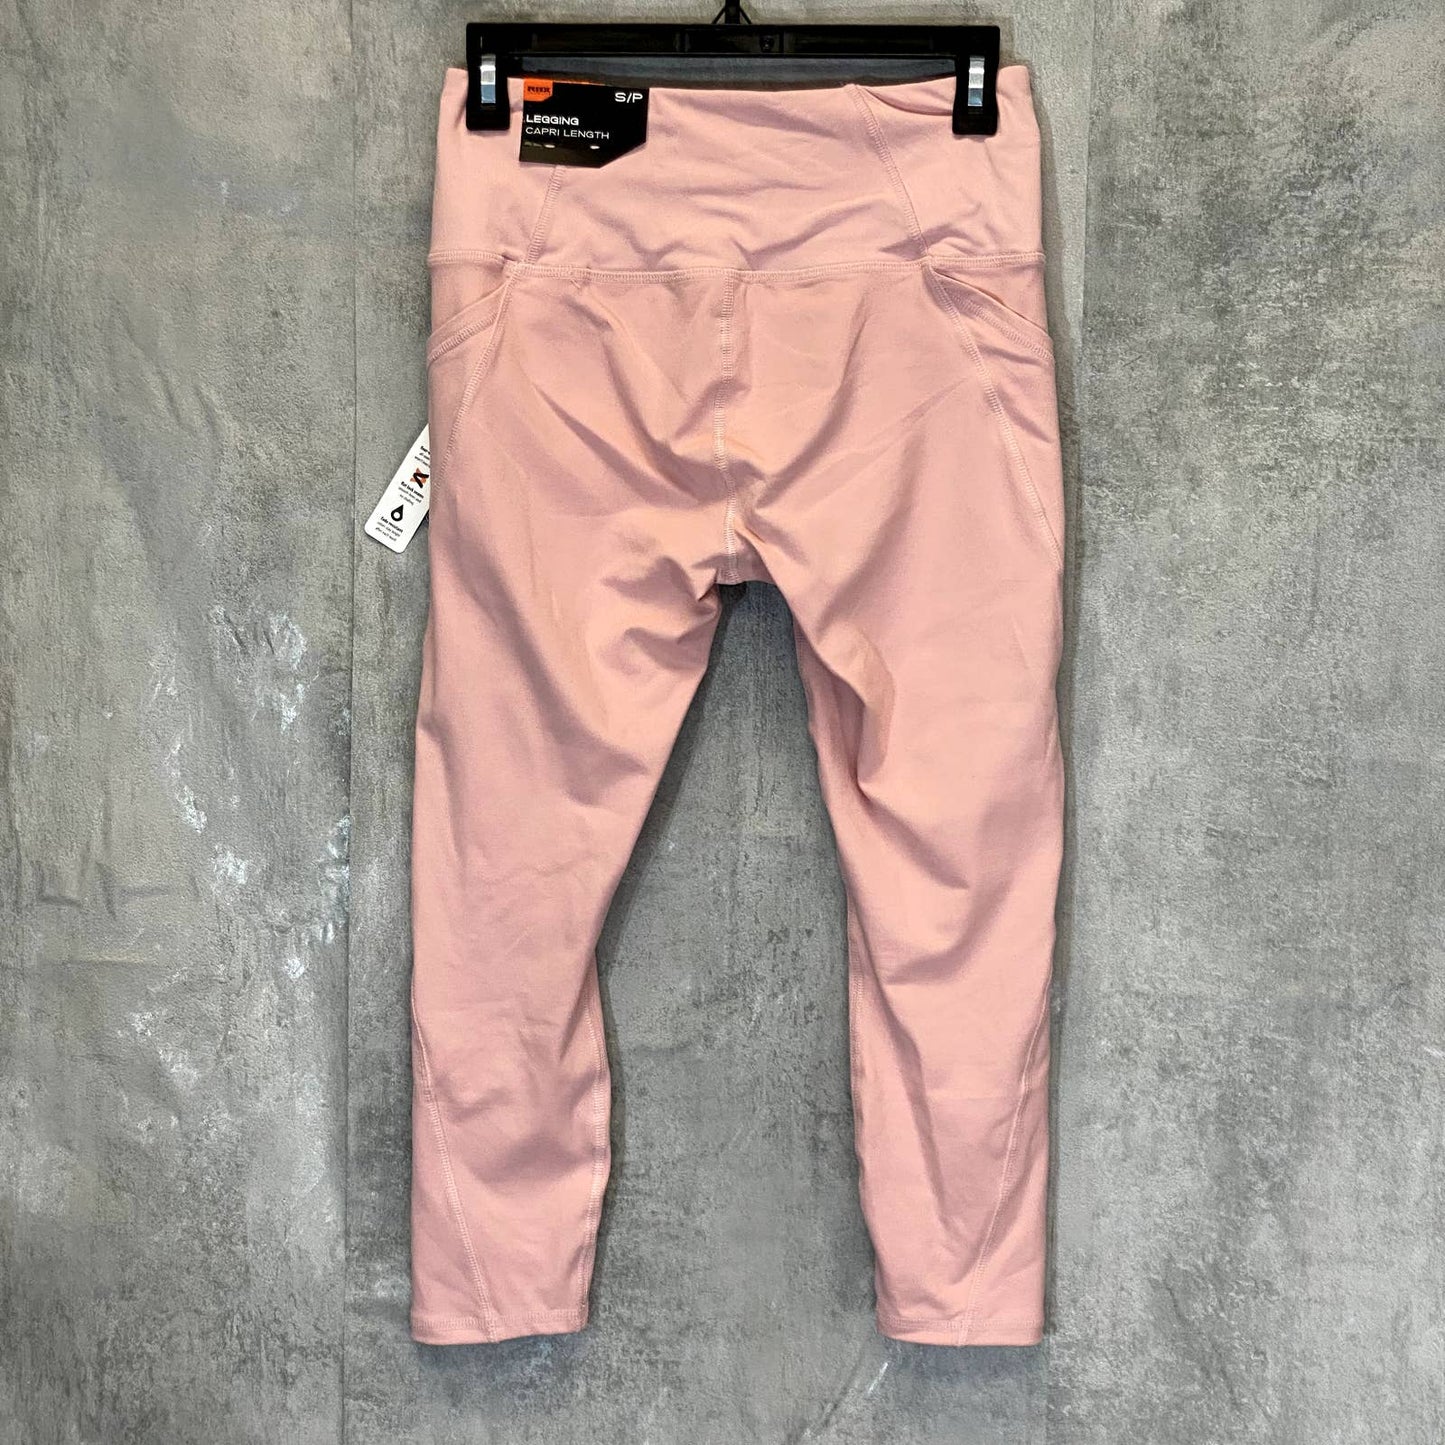 RBX Women's Think Pink 4-Way Stretch Quick Drying Pull-On Capri Leggings SZ S